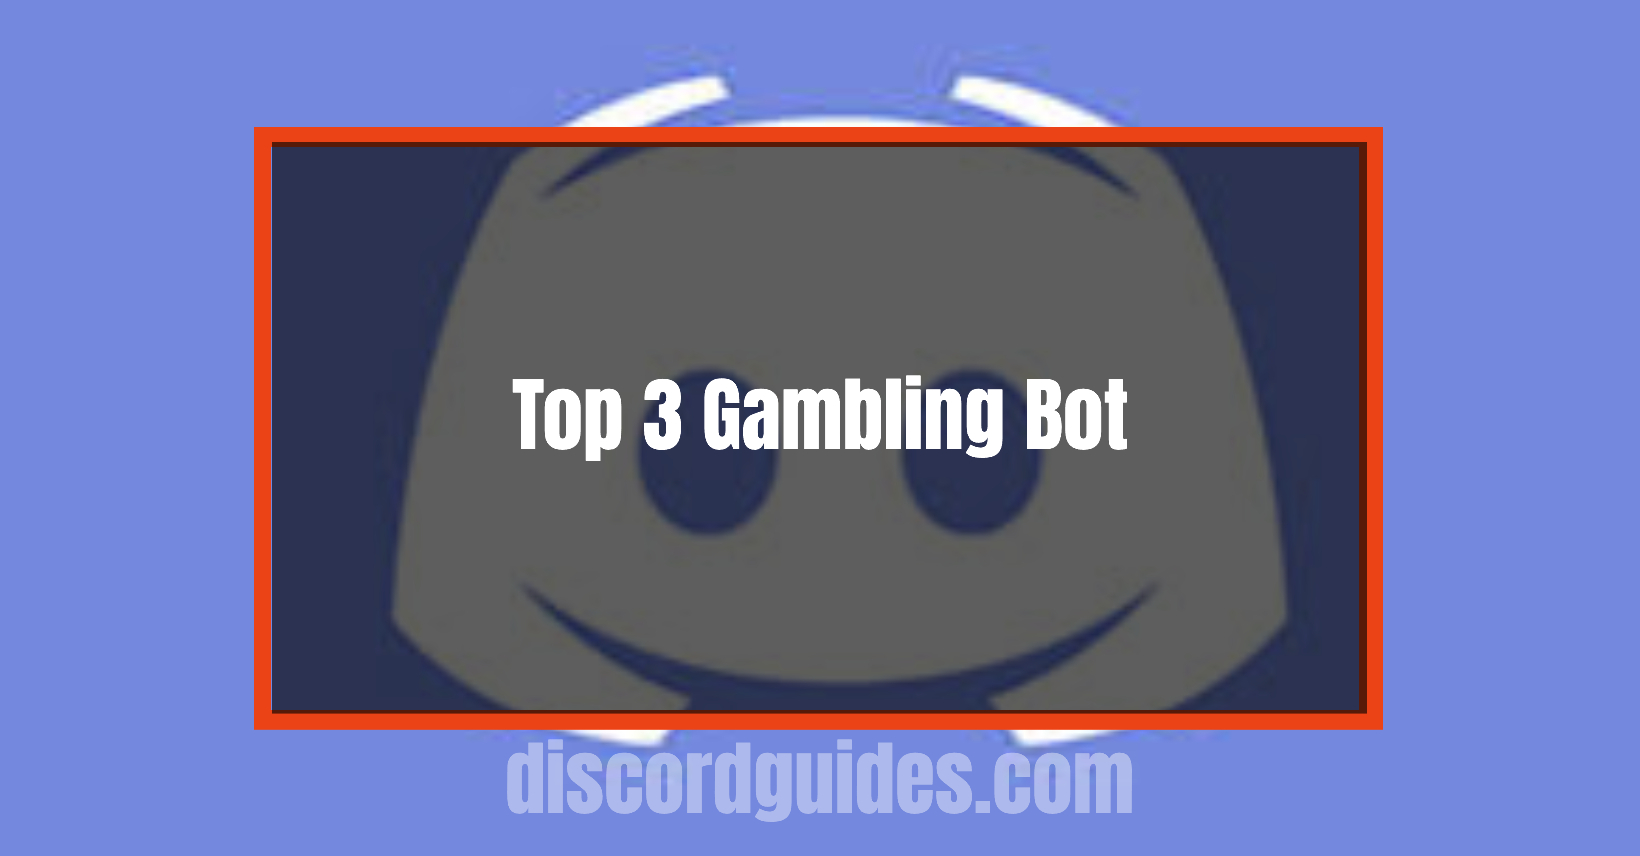 Gambling Bots Discord: Top 3 Most Famous & Best Gambling Bots